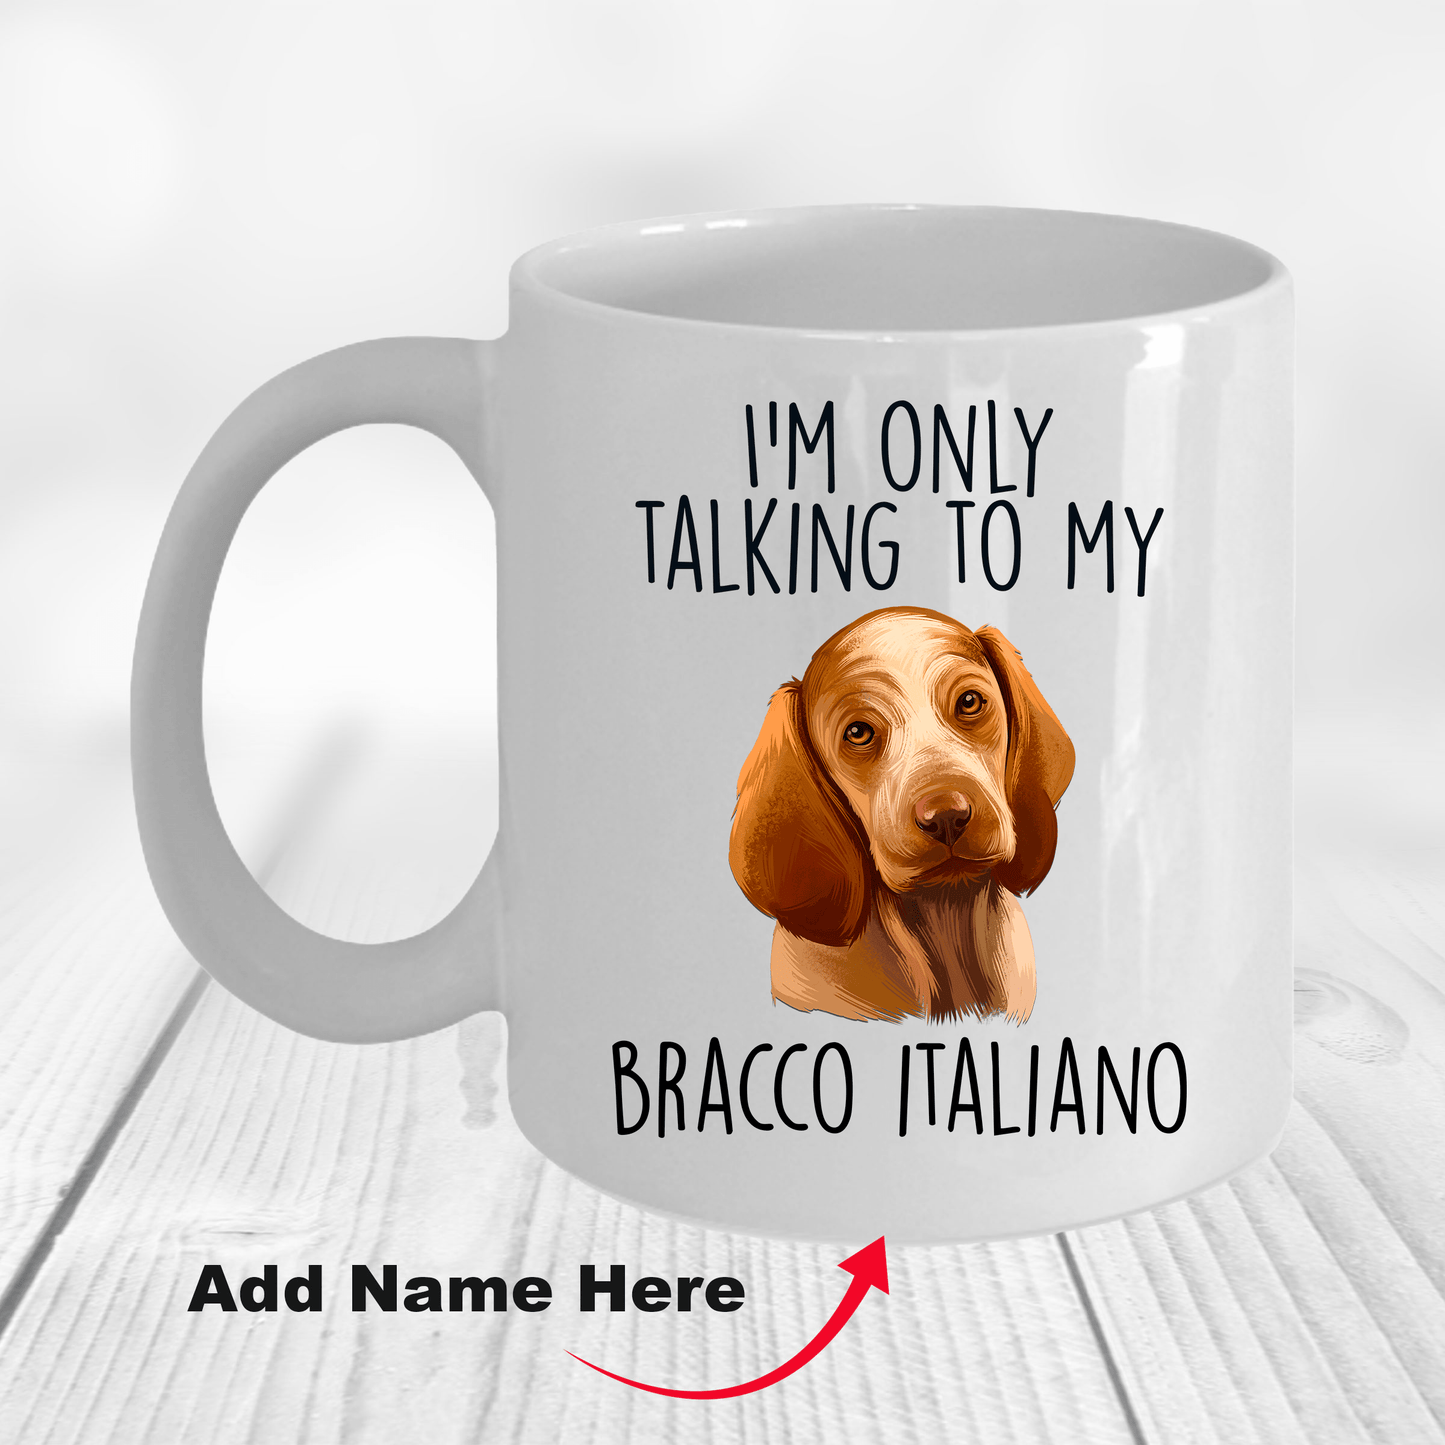 Bracco Italiano Funny Ceramic Coffee Mug - I'm Only Talking to my Dog